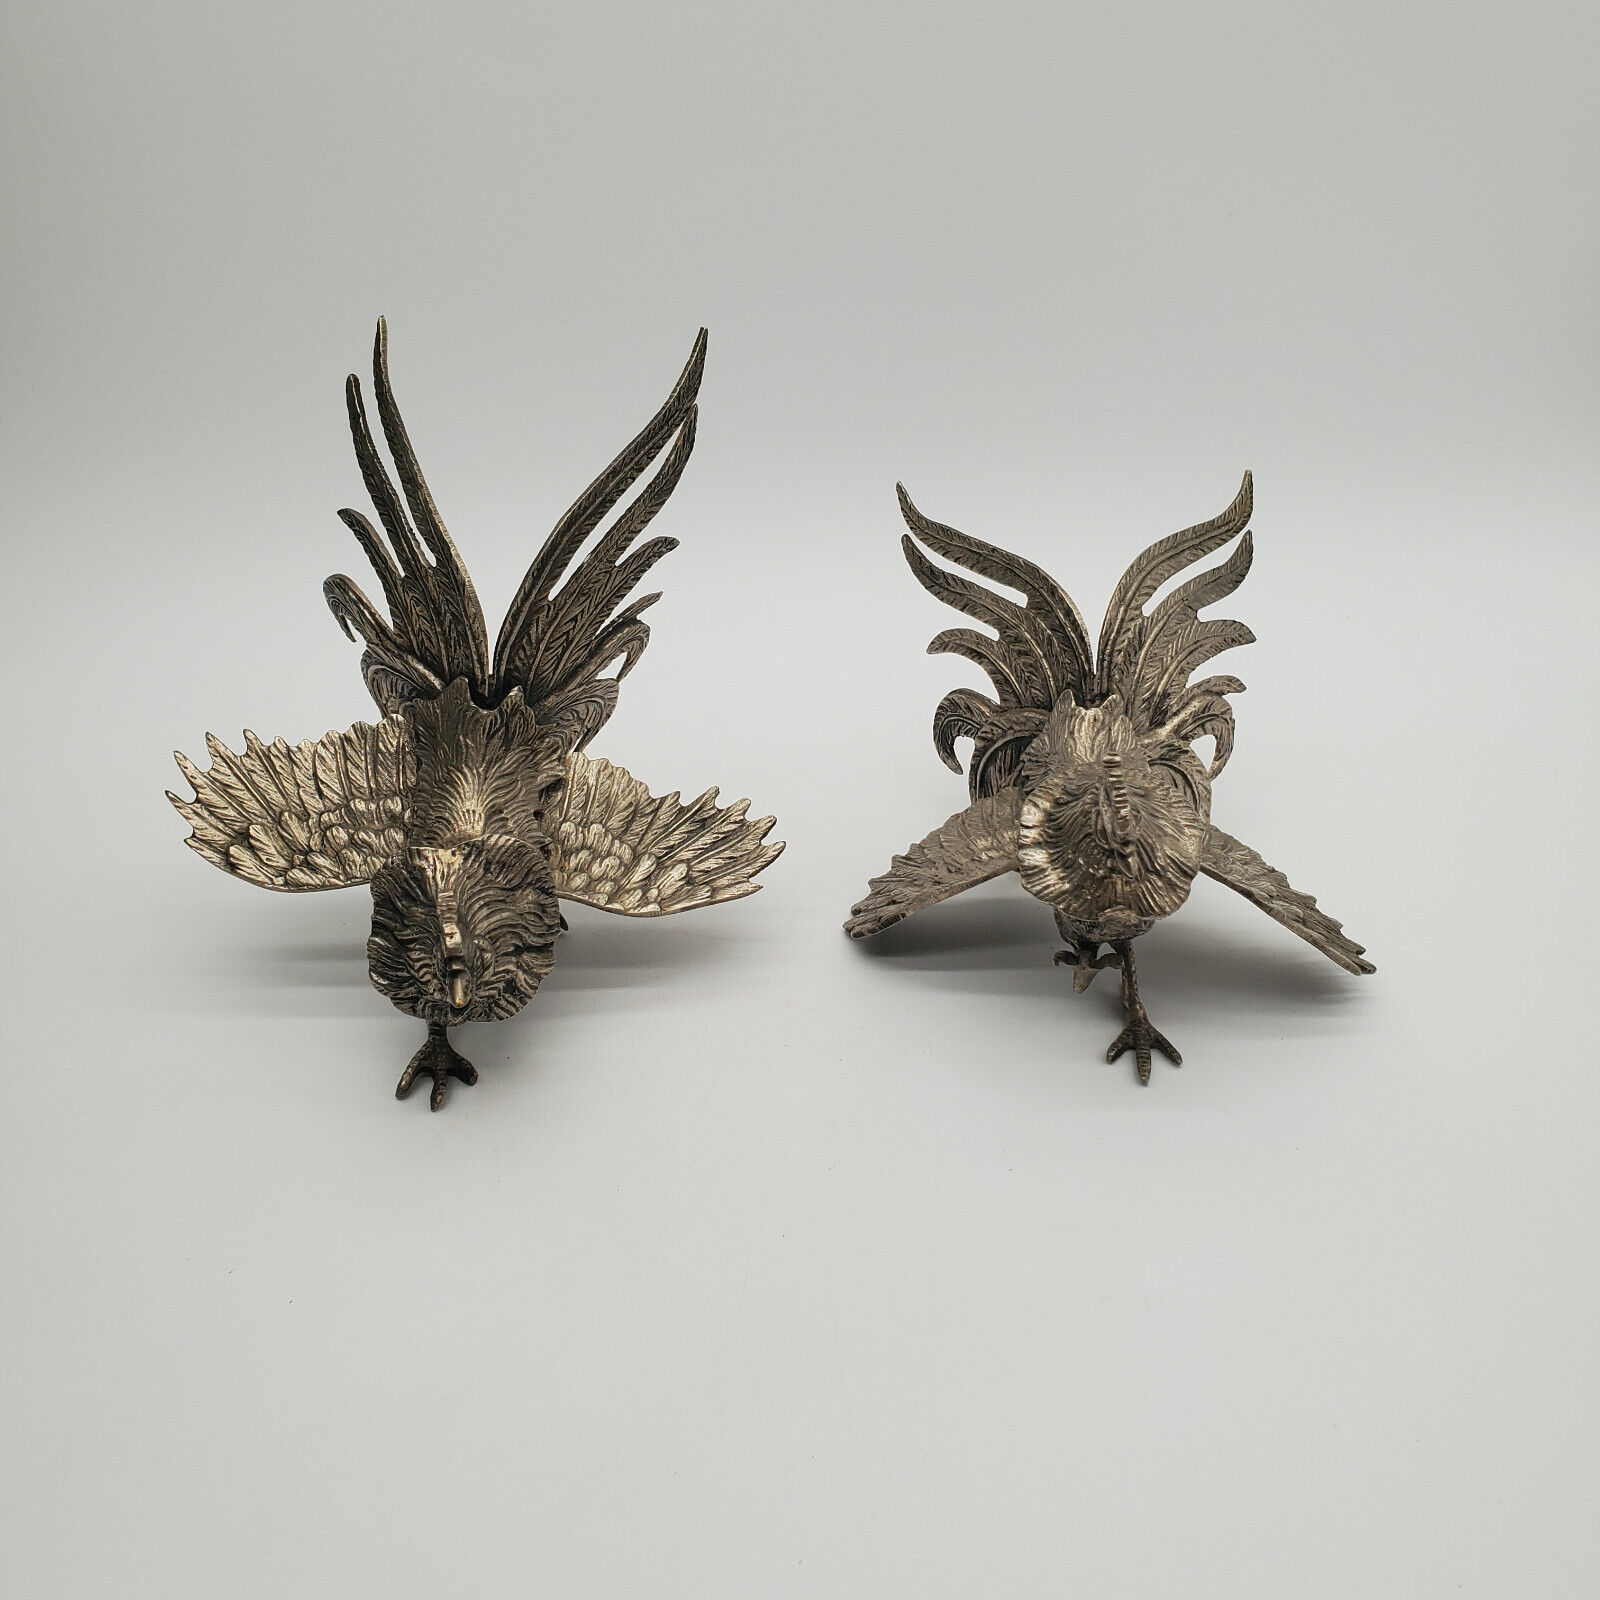 2 Vintage Ornate Brass Fighting Roosters Sculptures